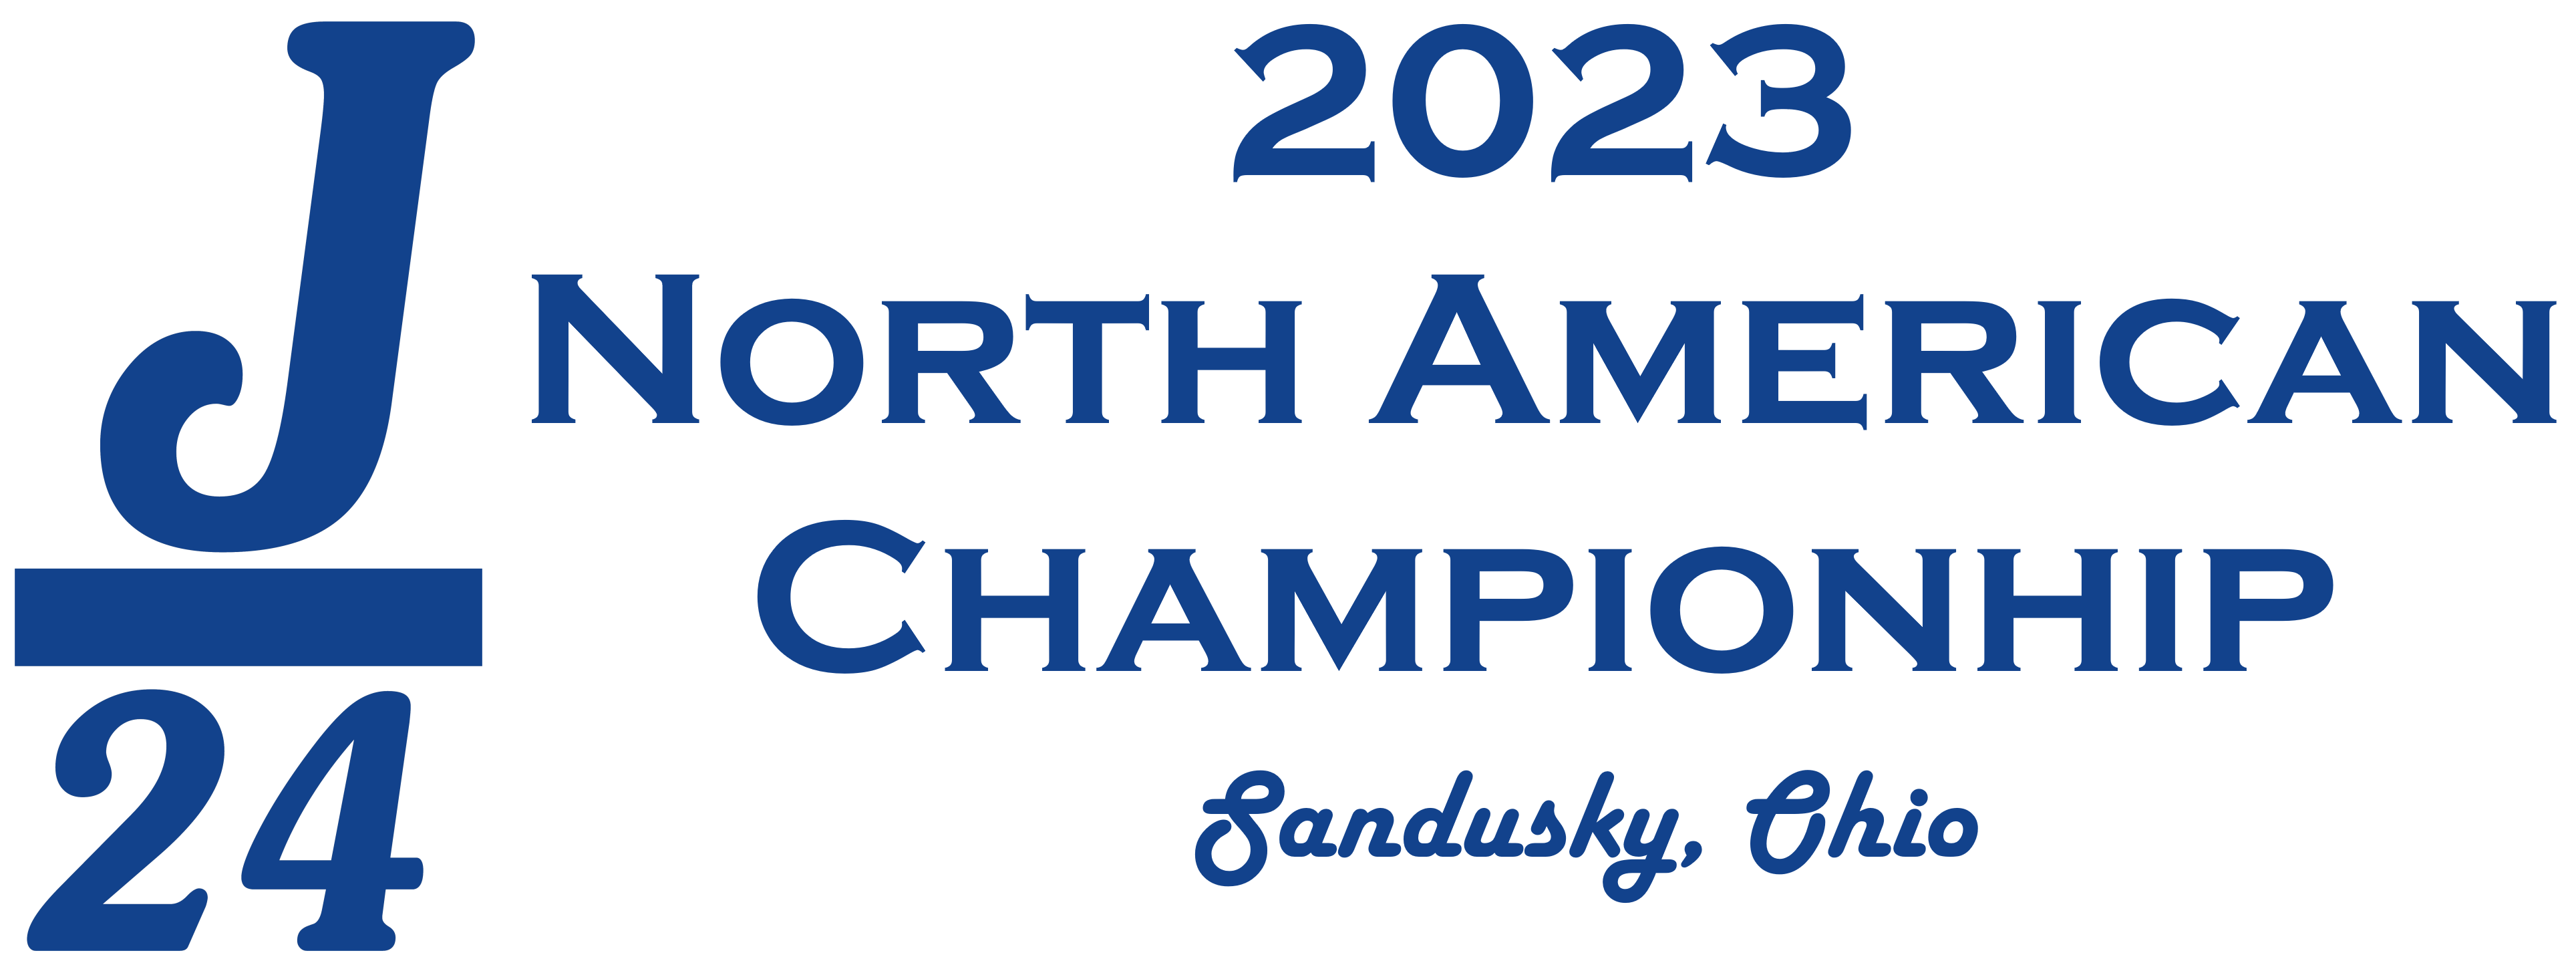 Schedule 2023 J24 North American Championship